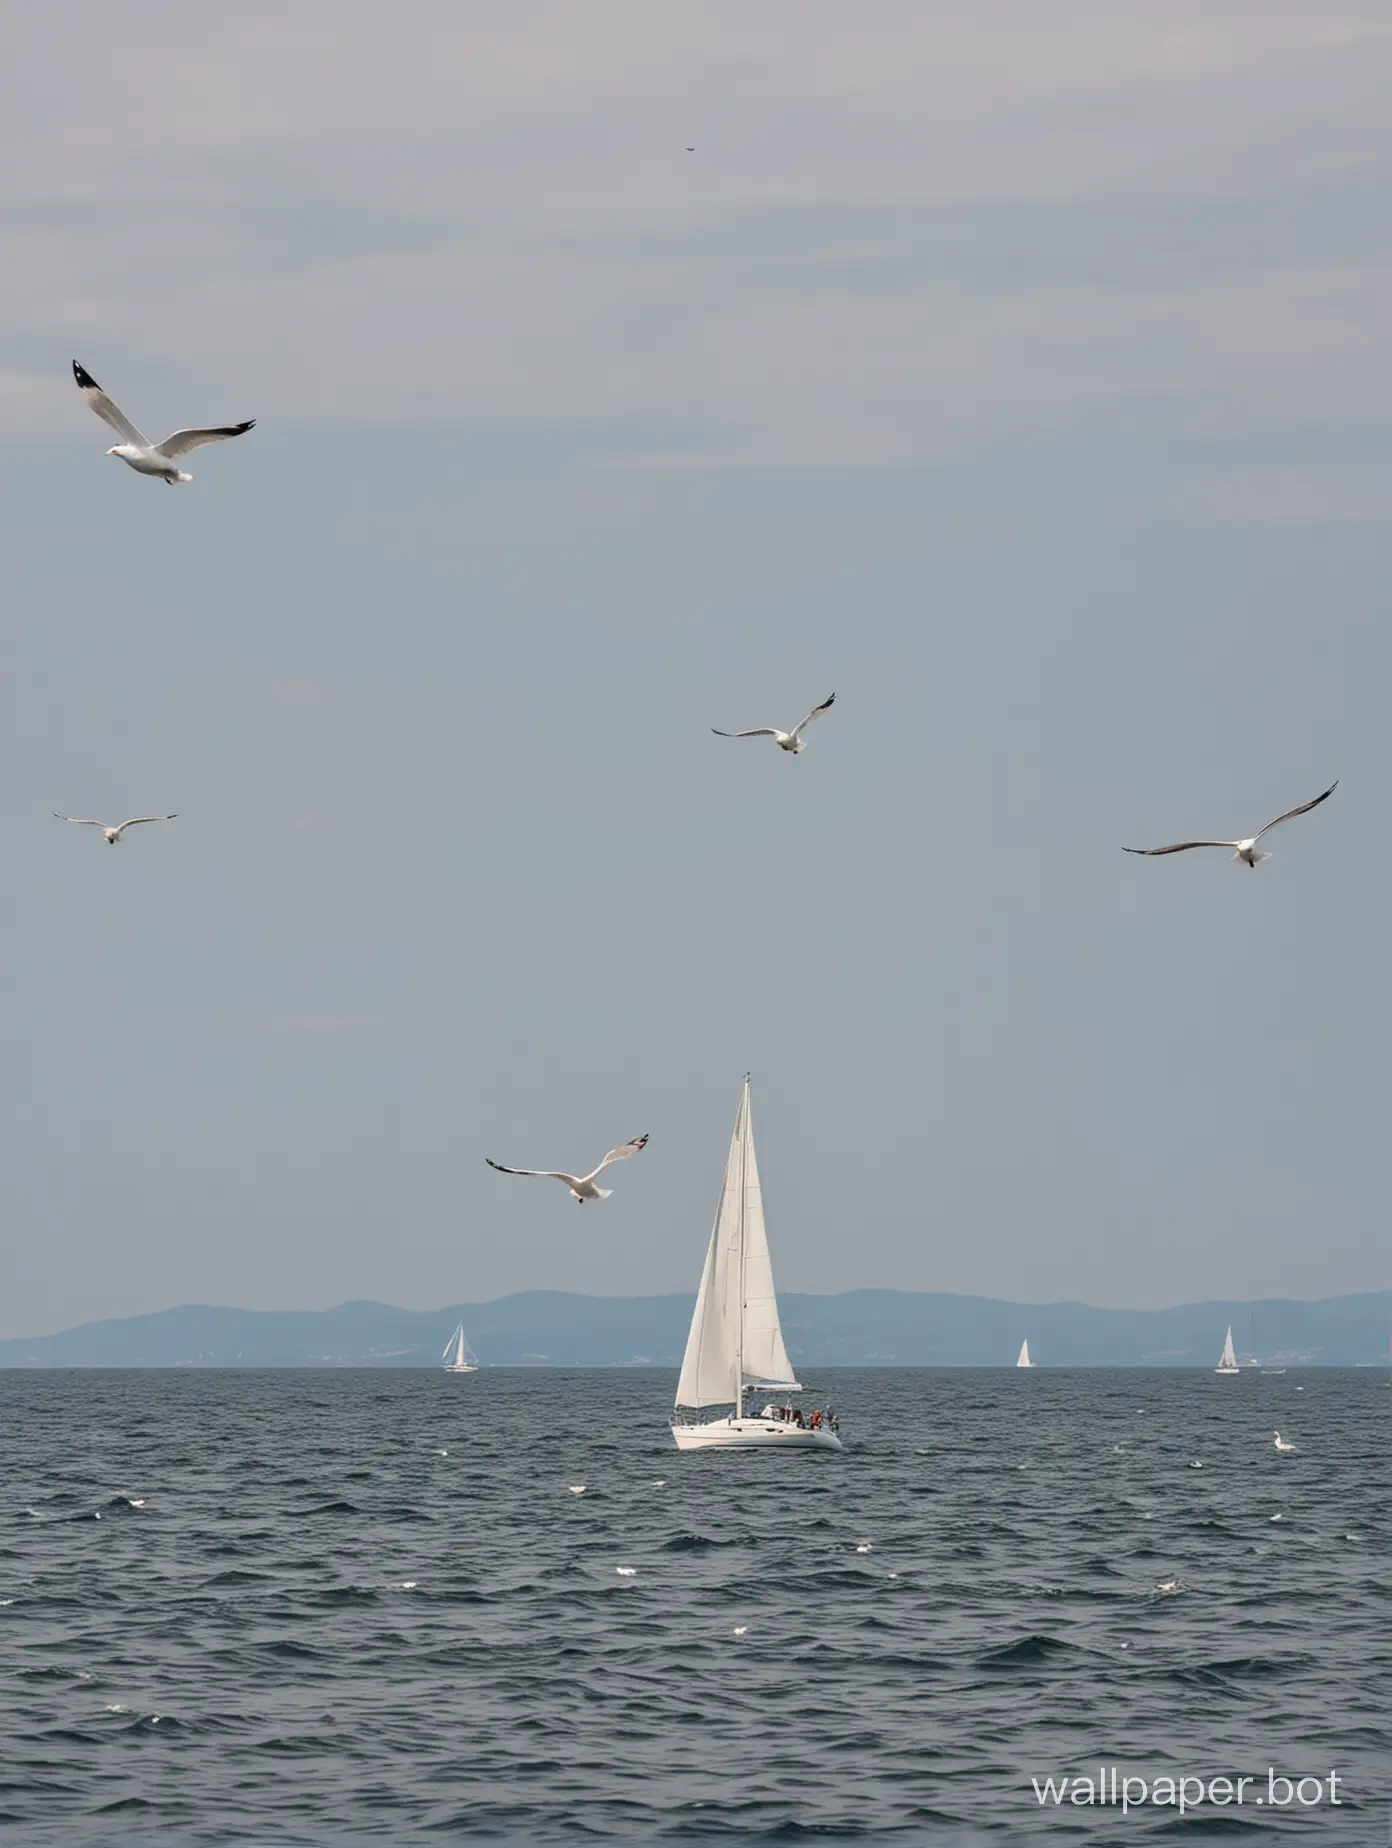 Black Sea, Crimea, white sailing yacht in the distance, three seagulls